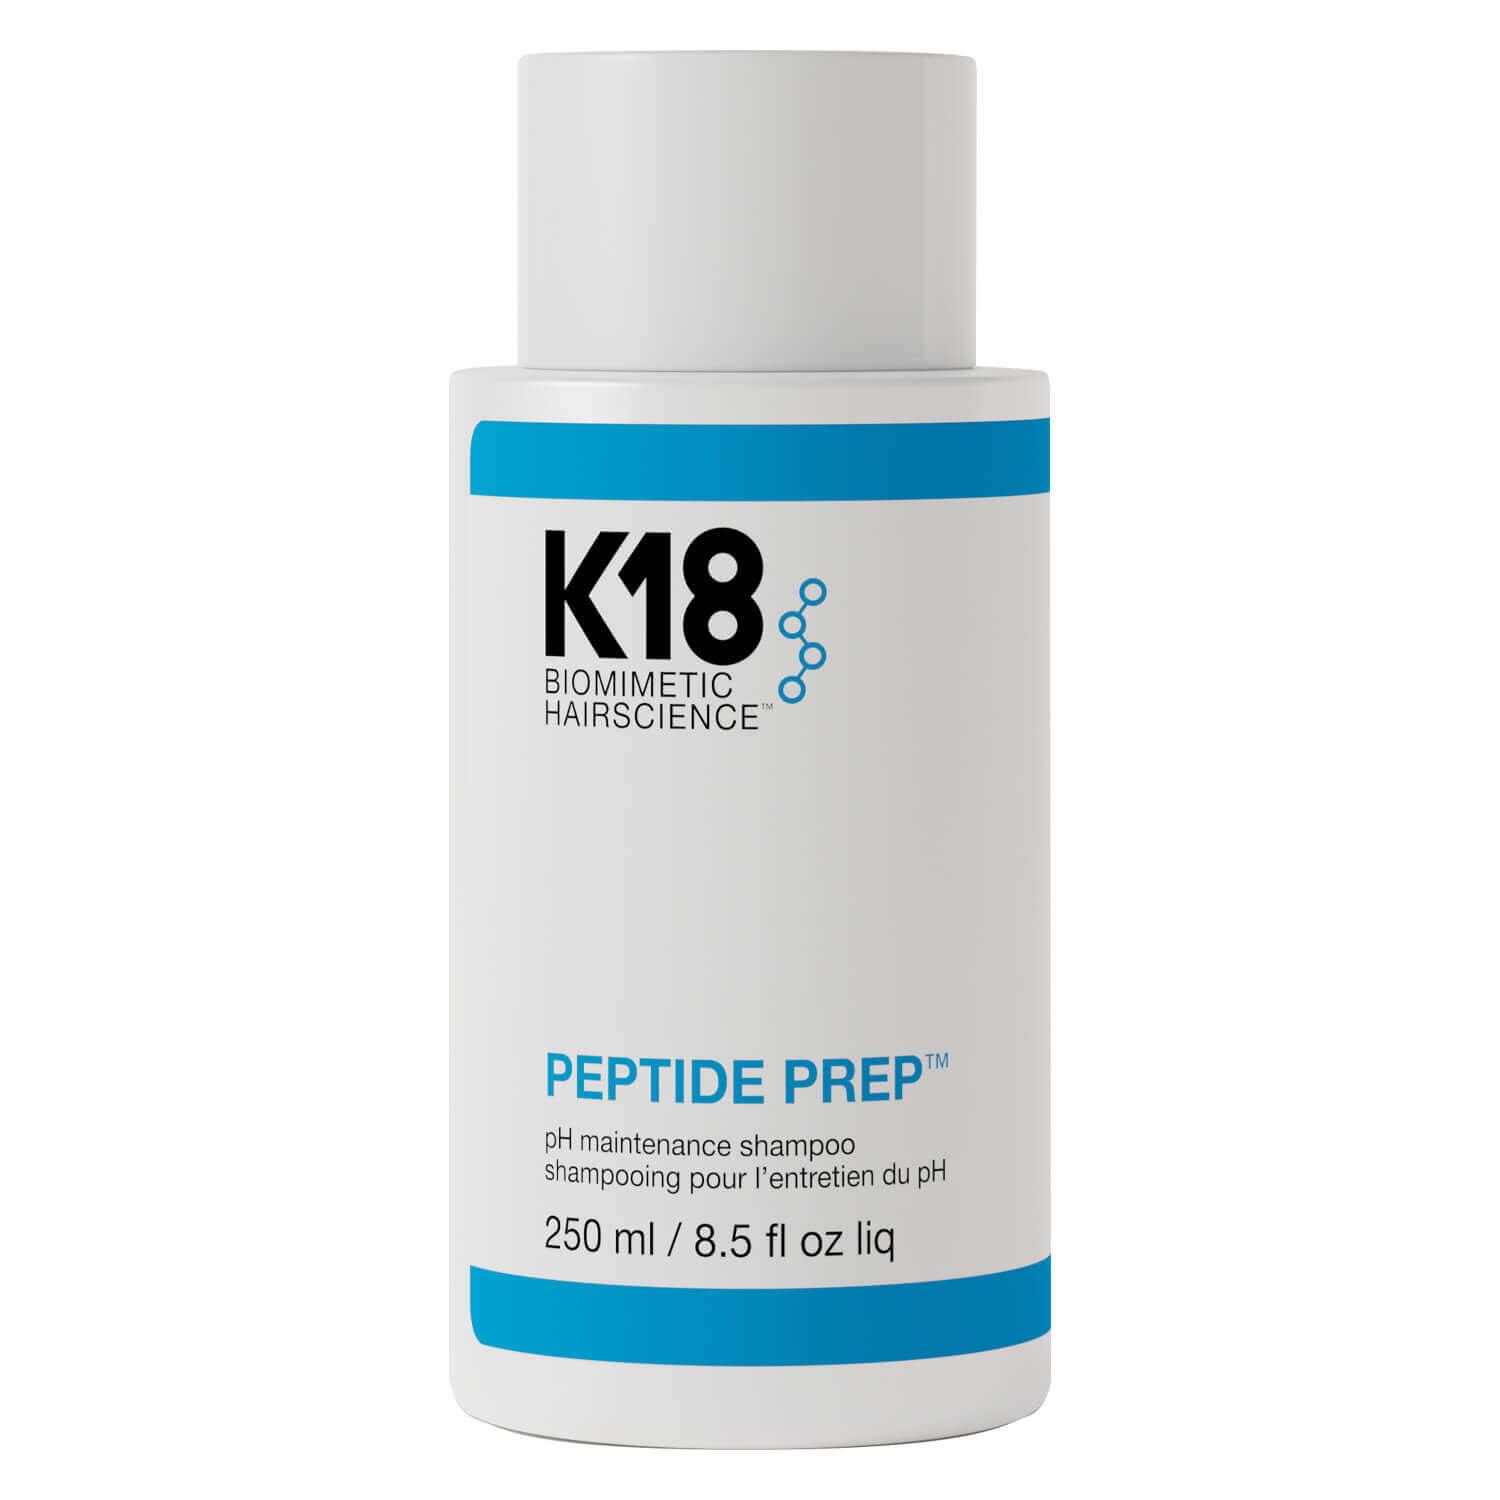 K18 Biomimetic Hairscience - Peptide Prep pH Maintenance Shampoo